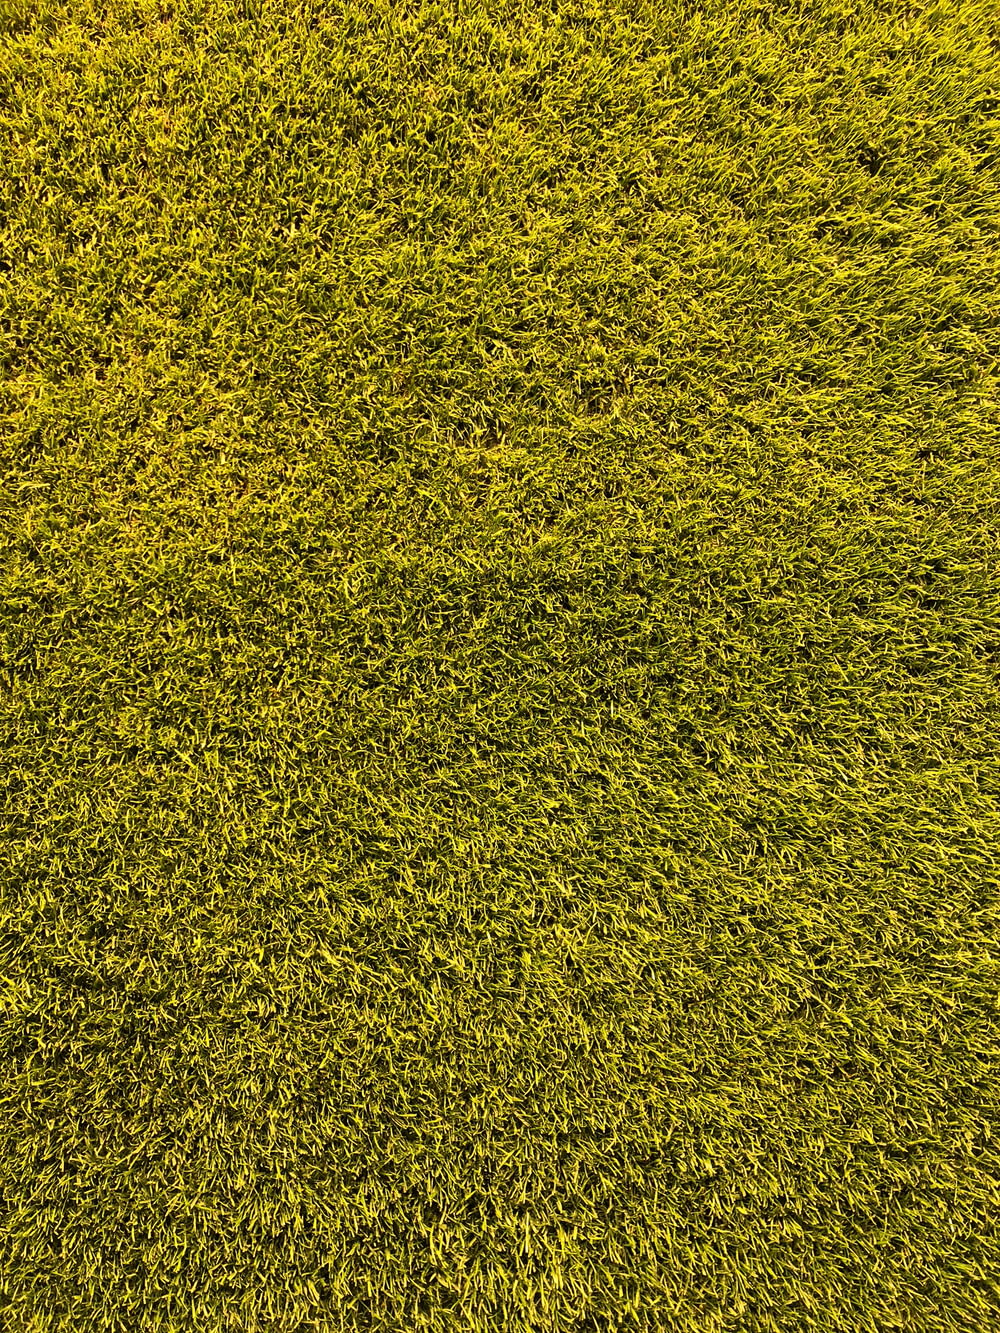 a close up view of a green grass field